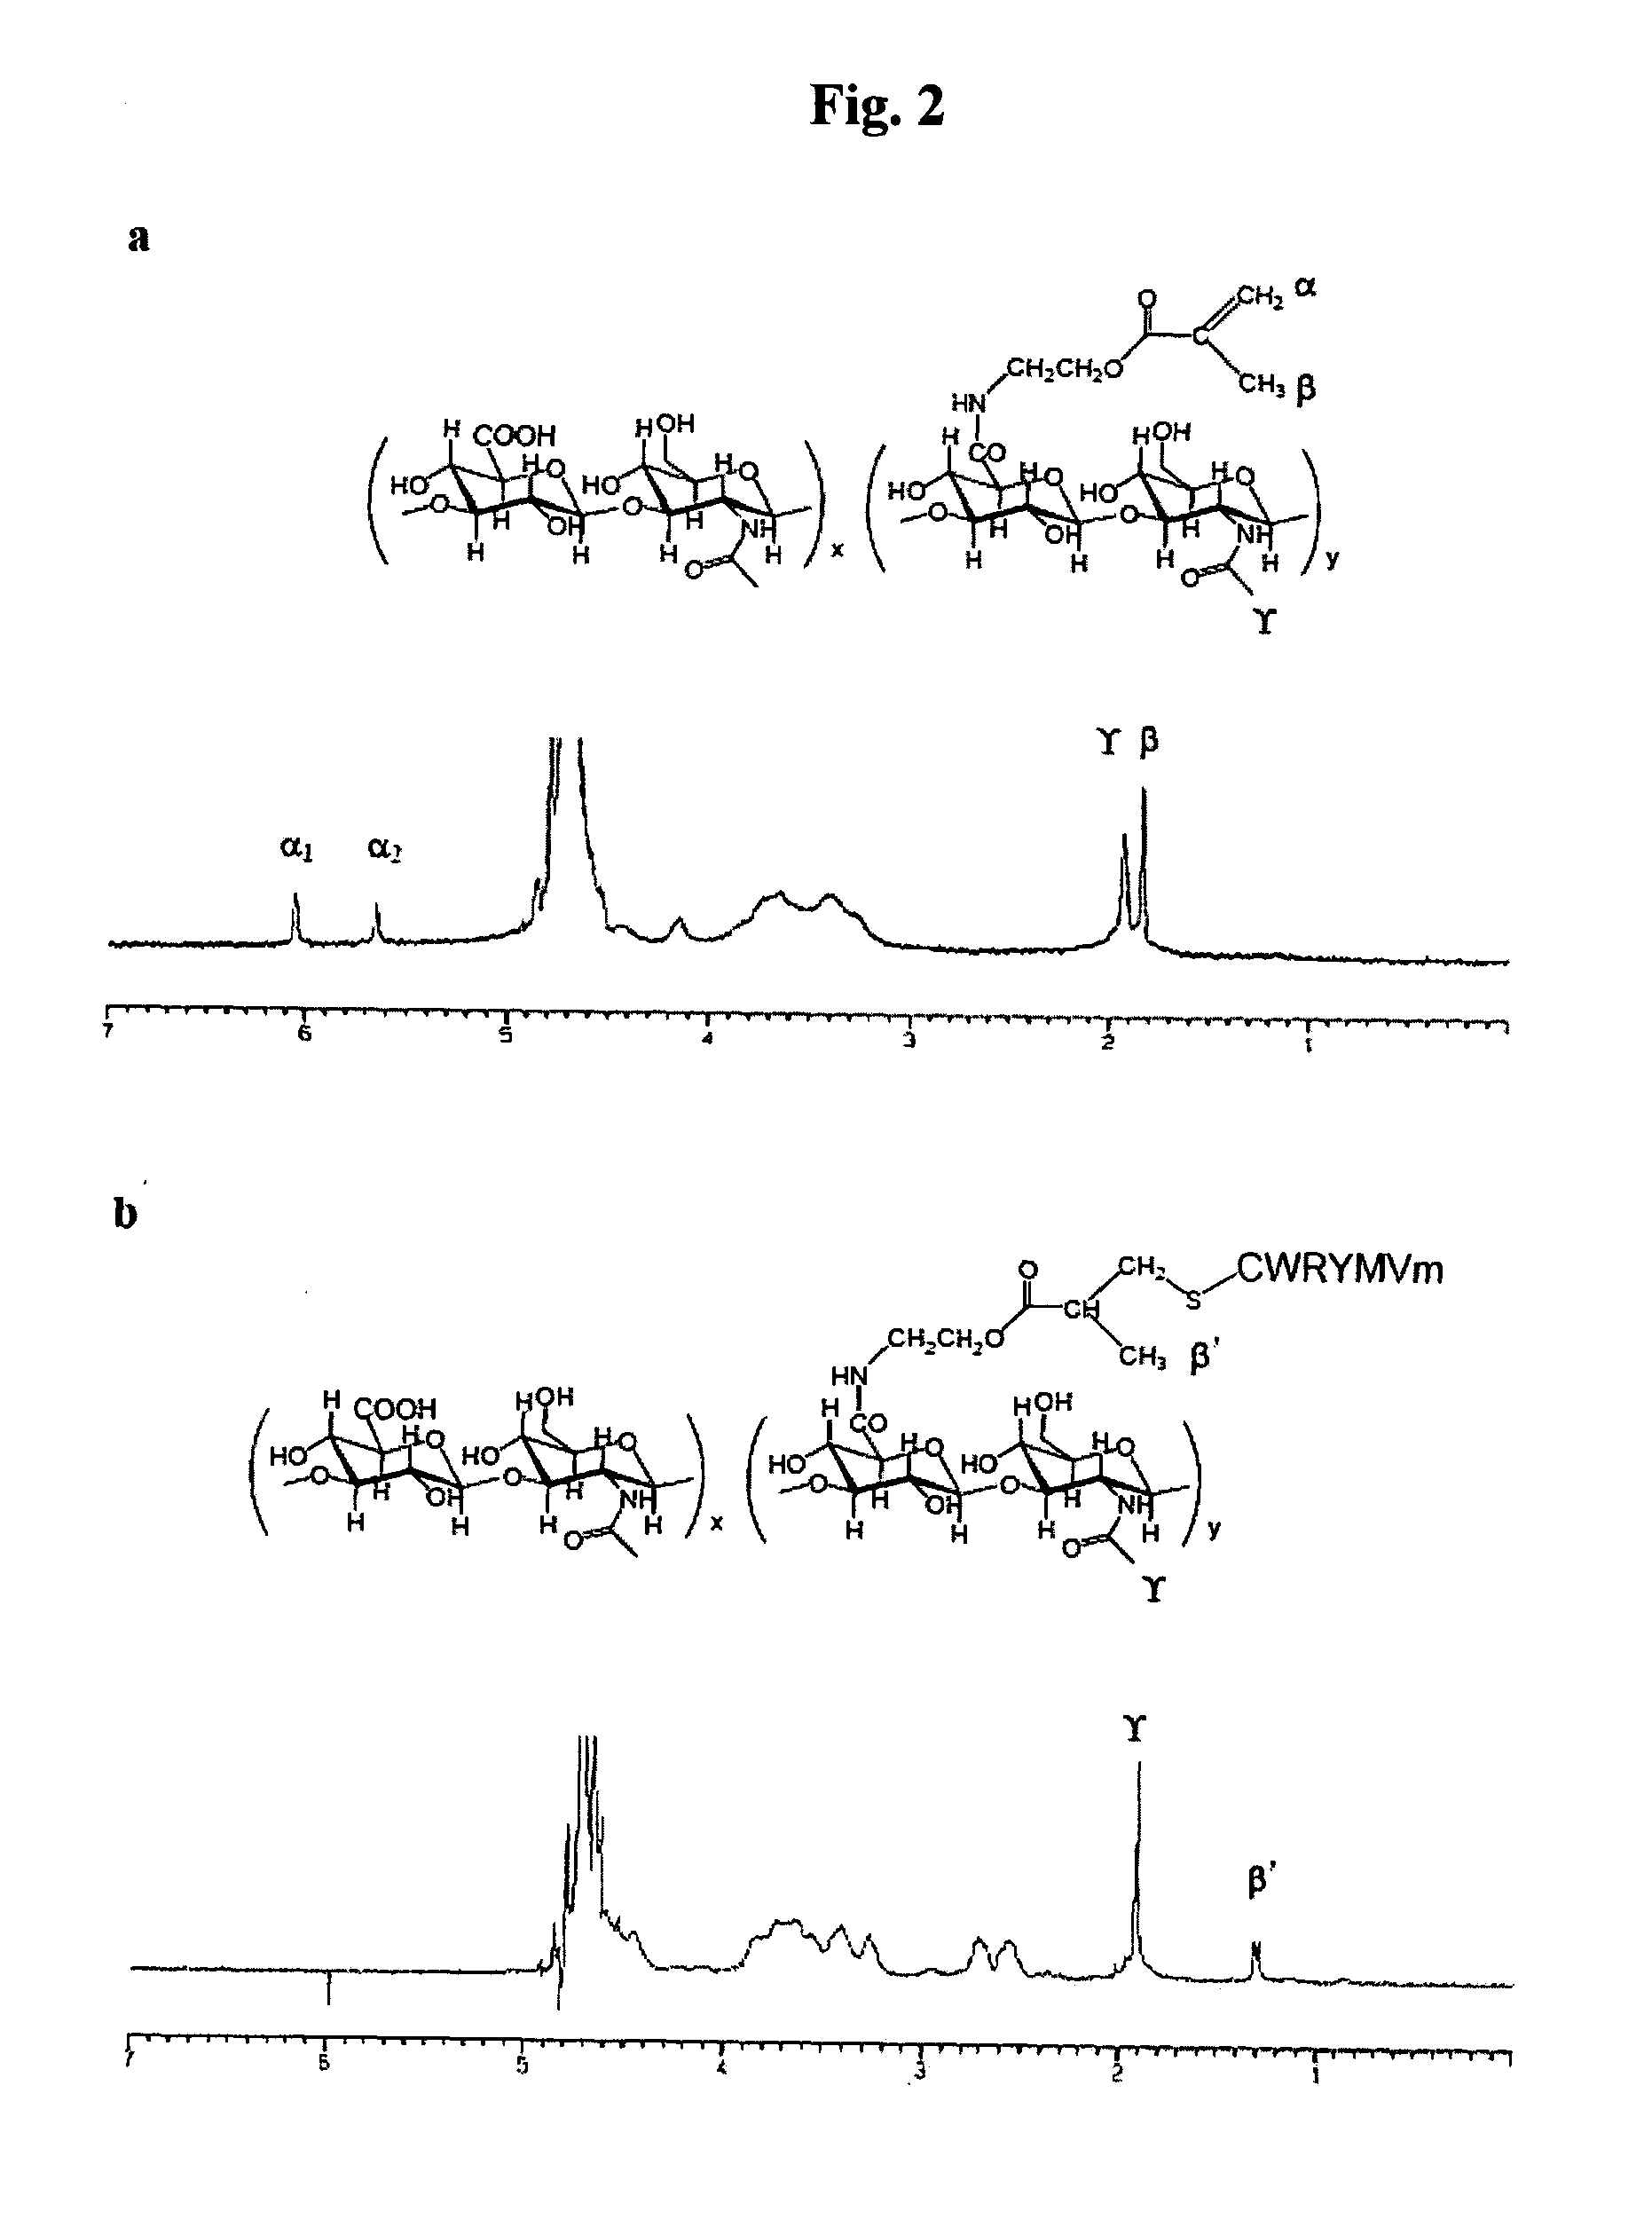 Long acting hyaluronic acid - peptide conjugate